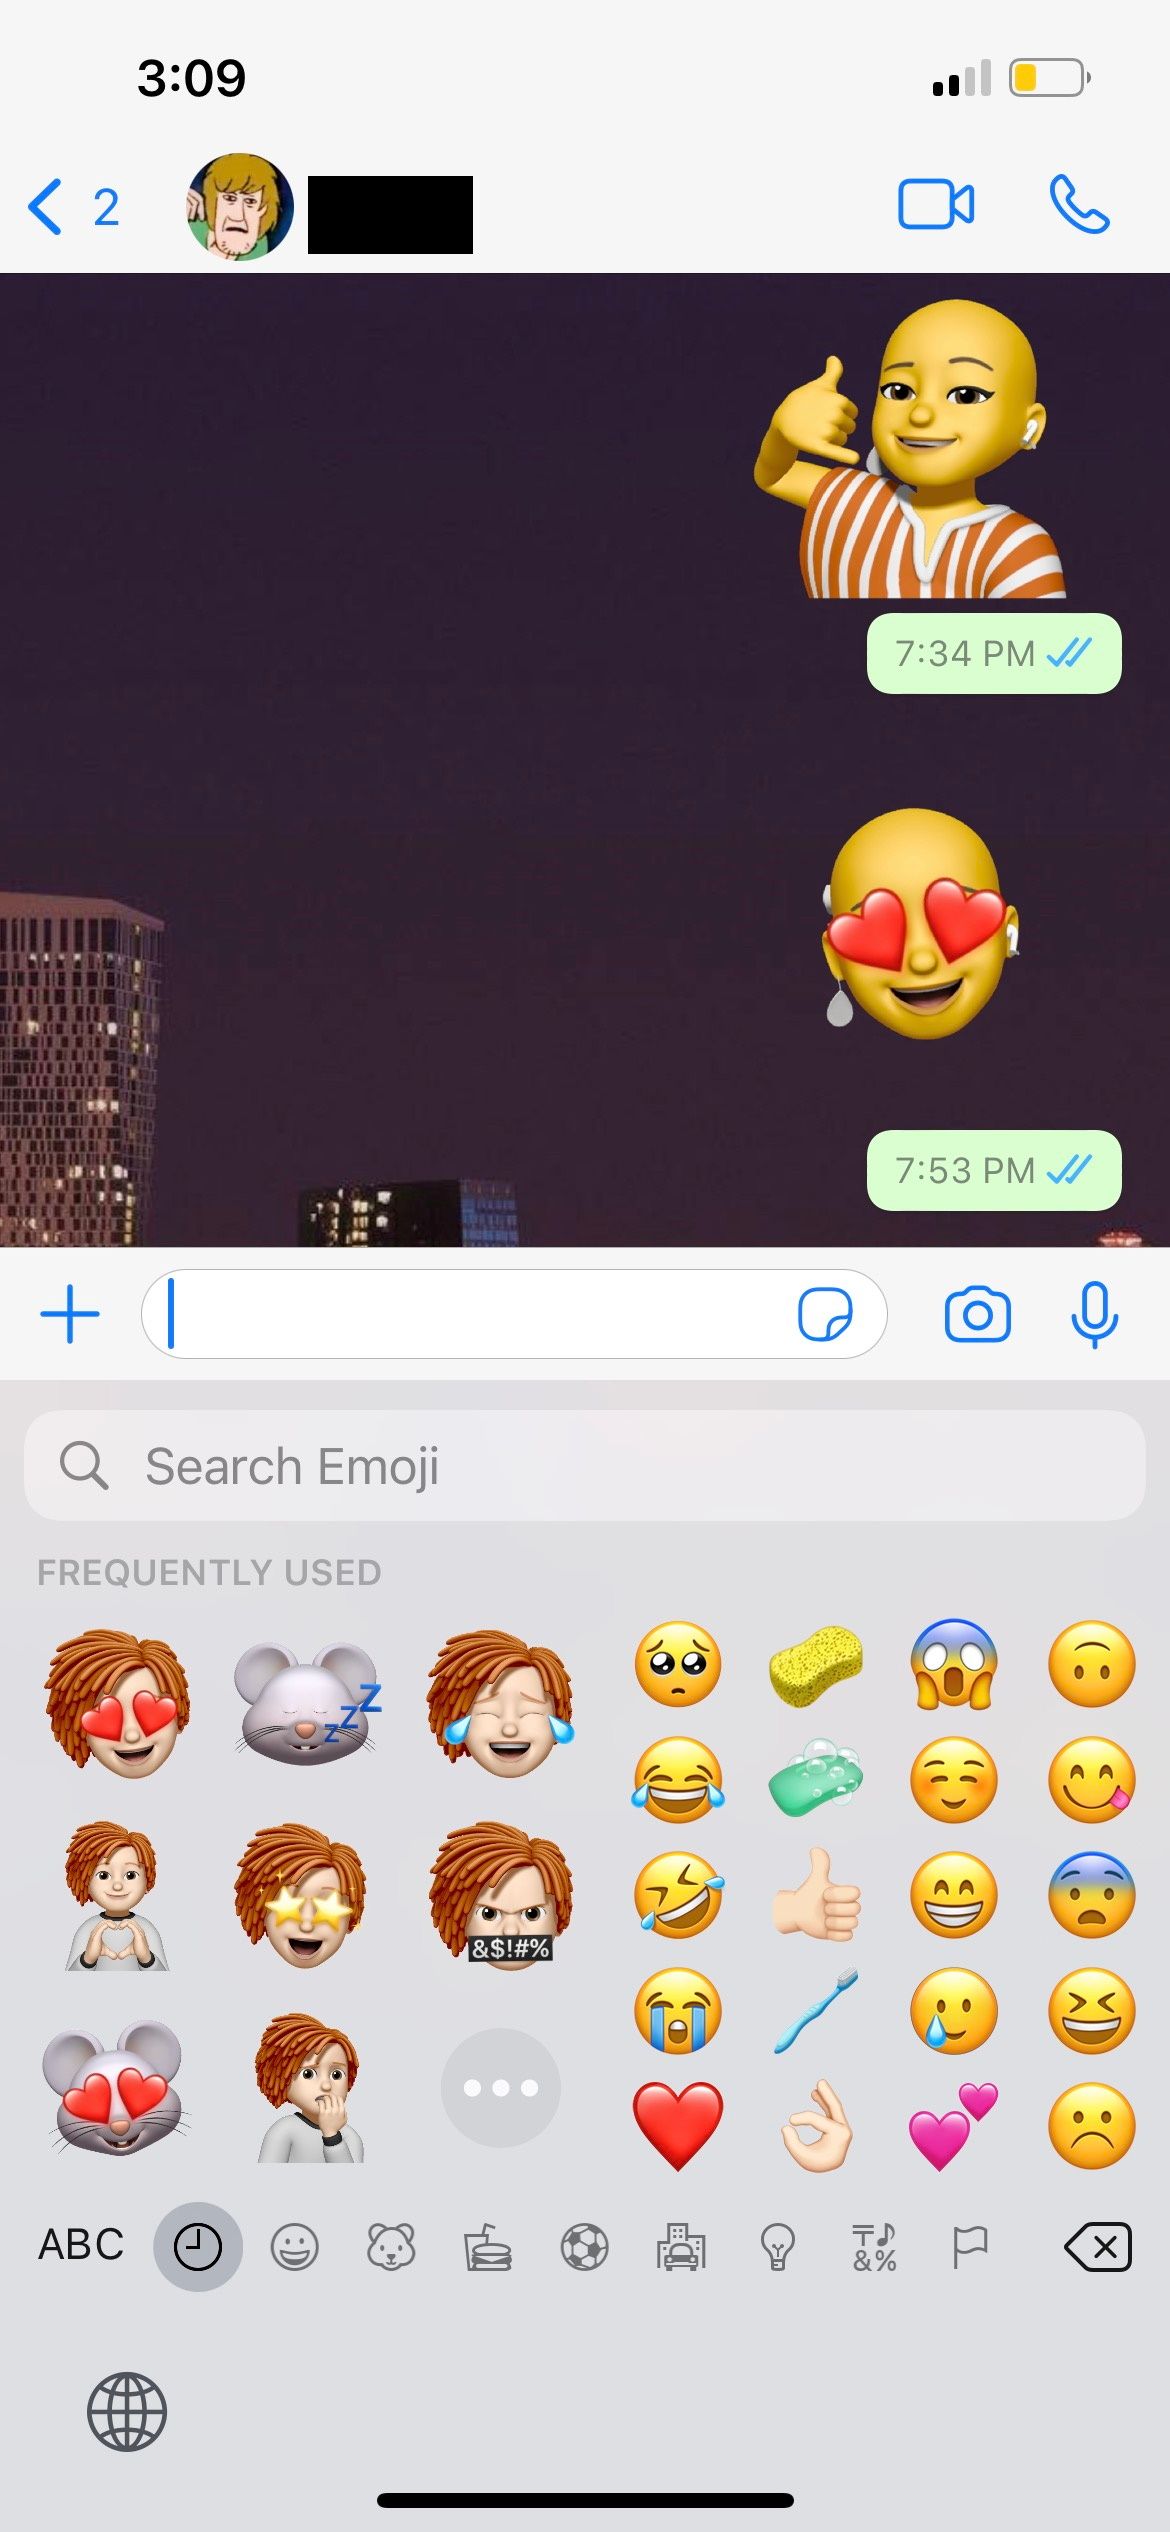 memoji stickers on iphone keyboard in whatsapp